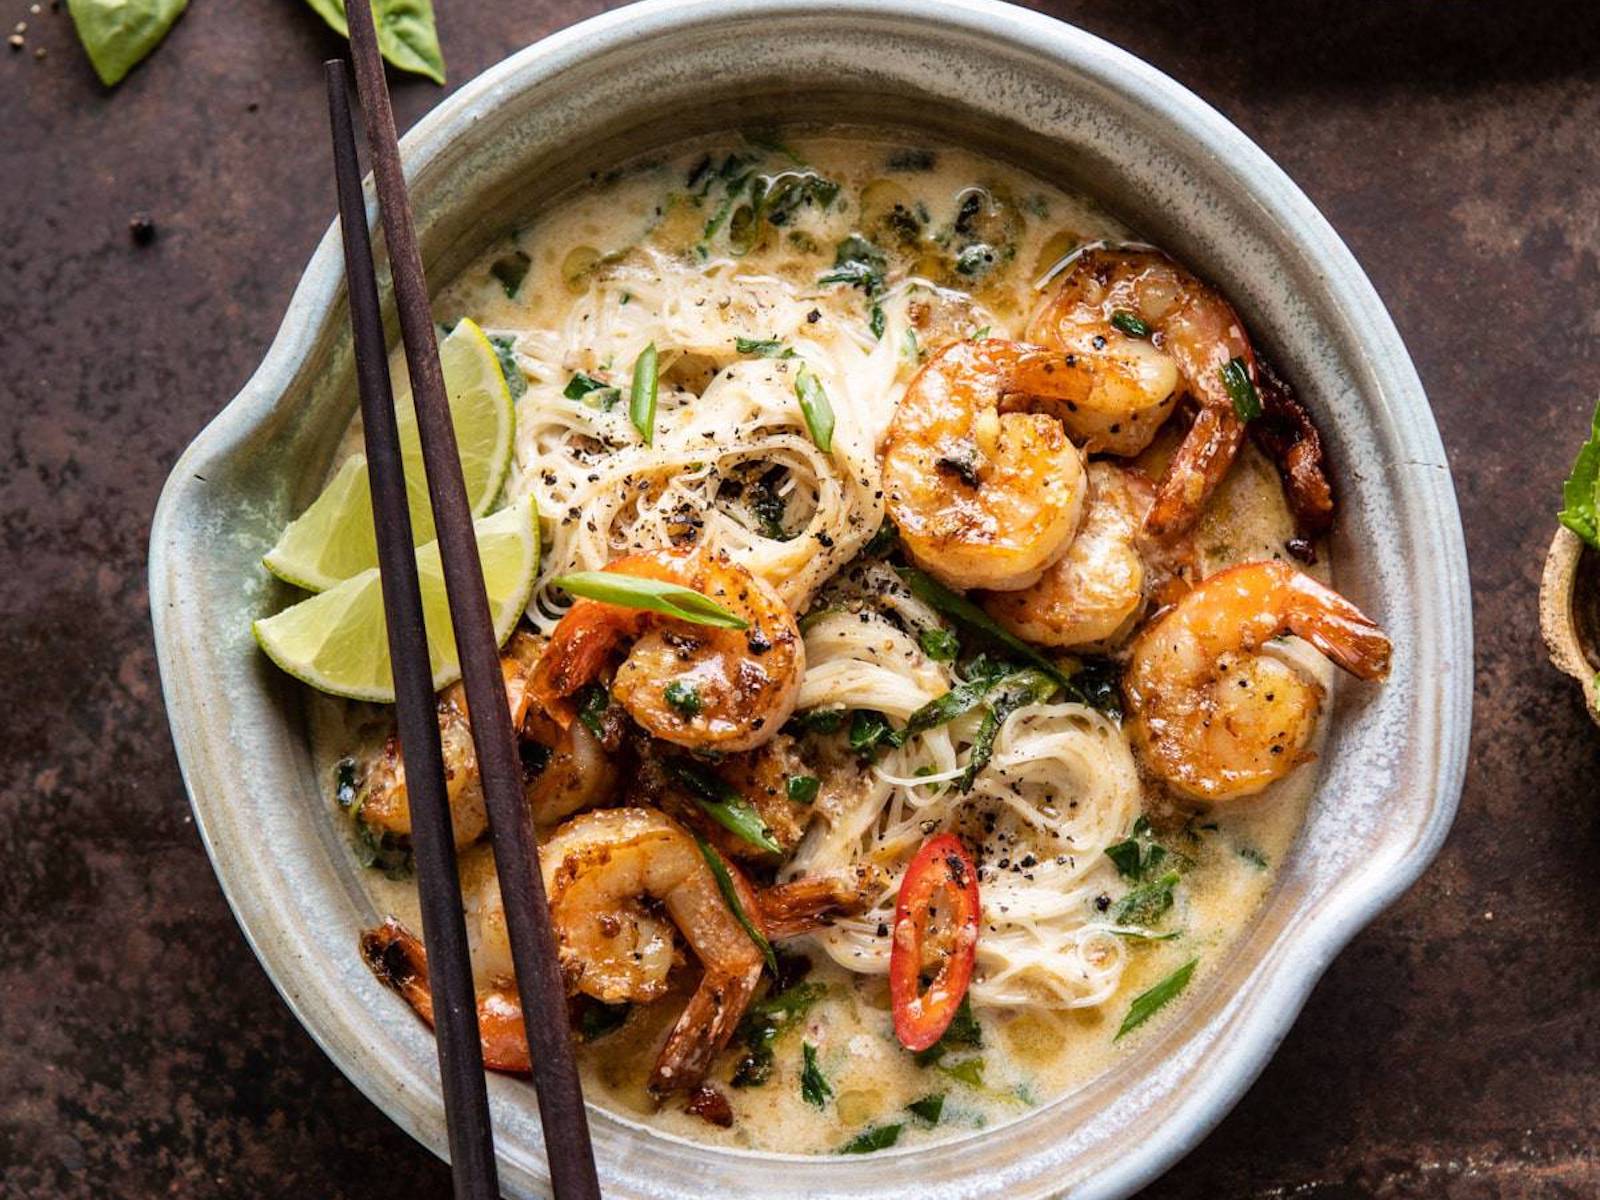 Healthy Shrimp Recipes, Garlic Butter and Coconut Milk, Courtesy of Half Baked Harvest